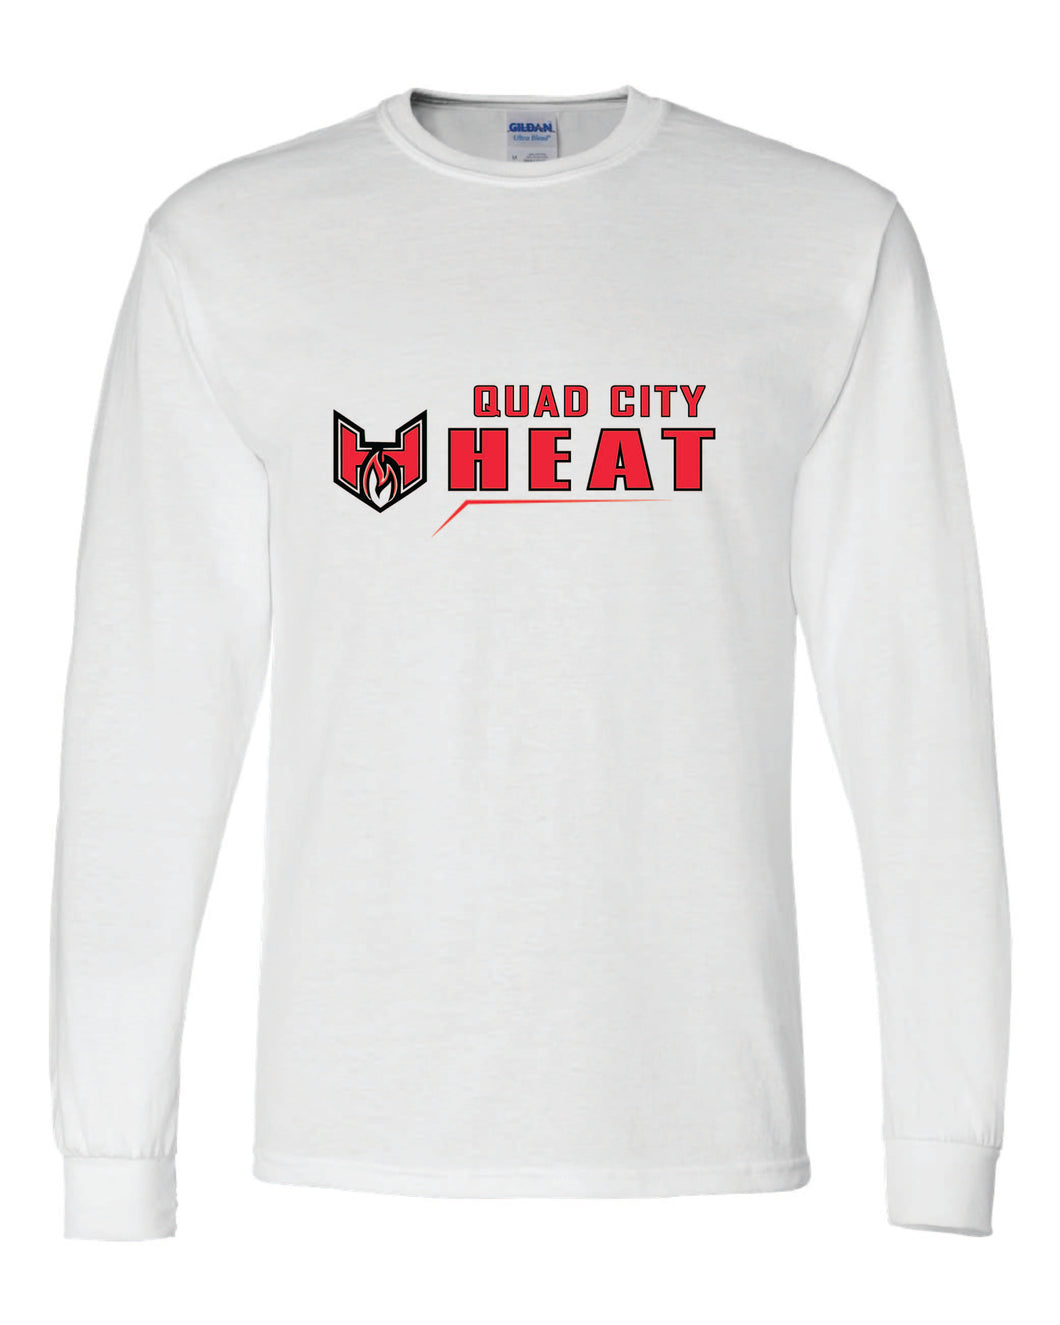 Quad City Heat - 